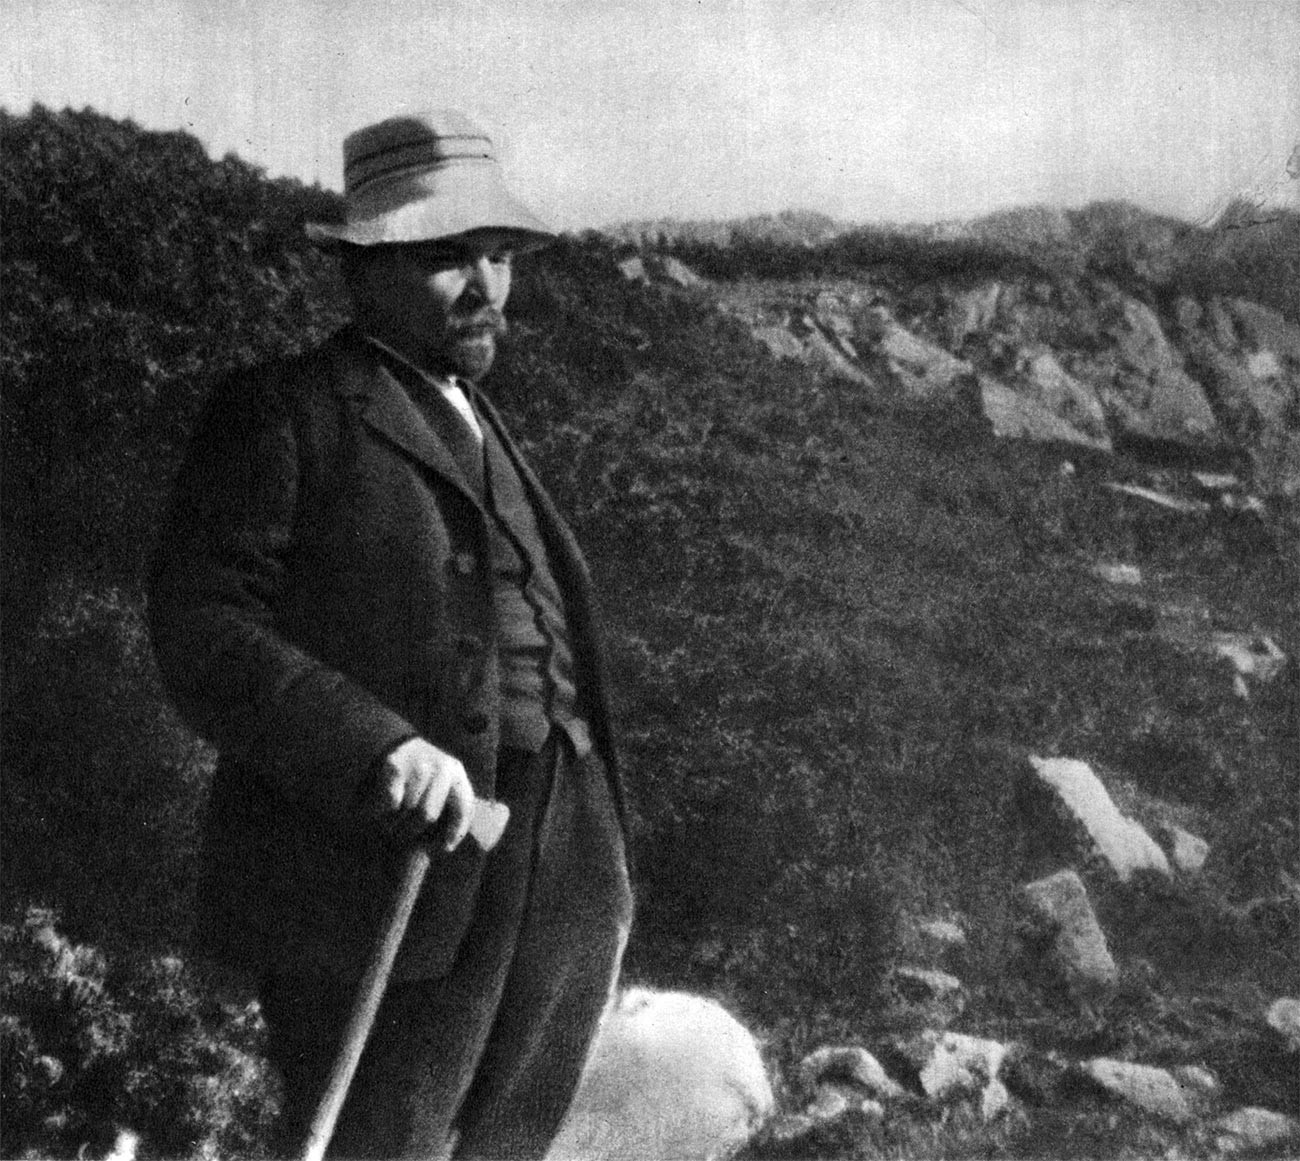 Vladimir Lenin di Zakopane, Polandia, 1914